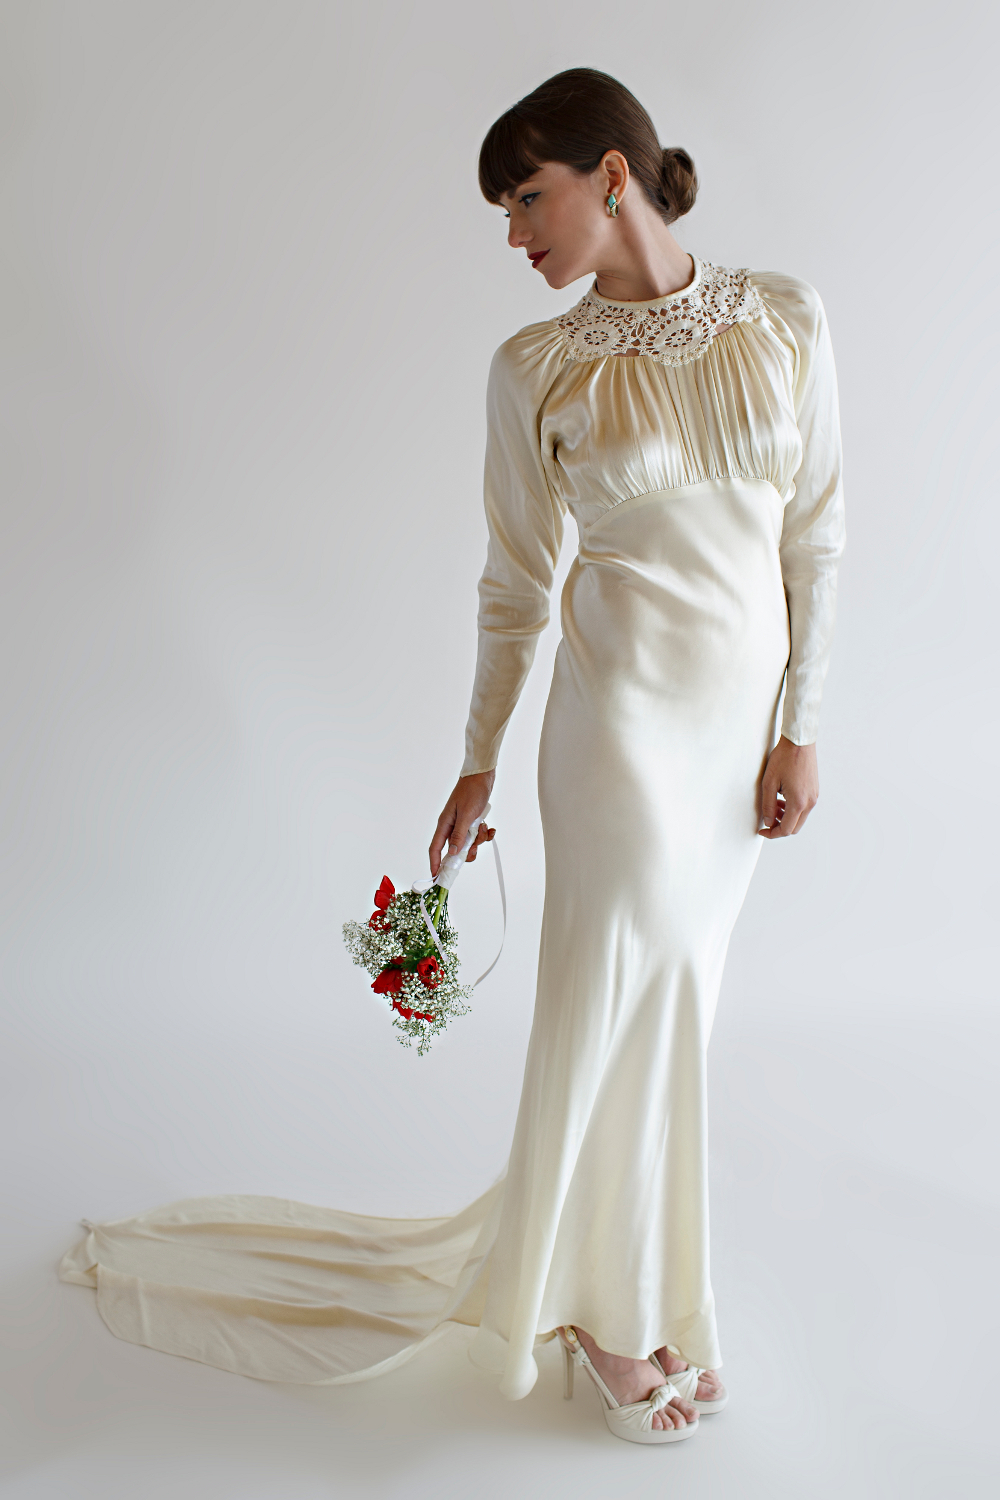 Beloved Vintage Bridal - The Lillian Gown